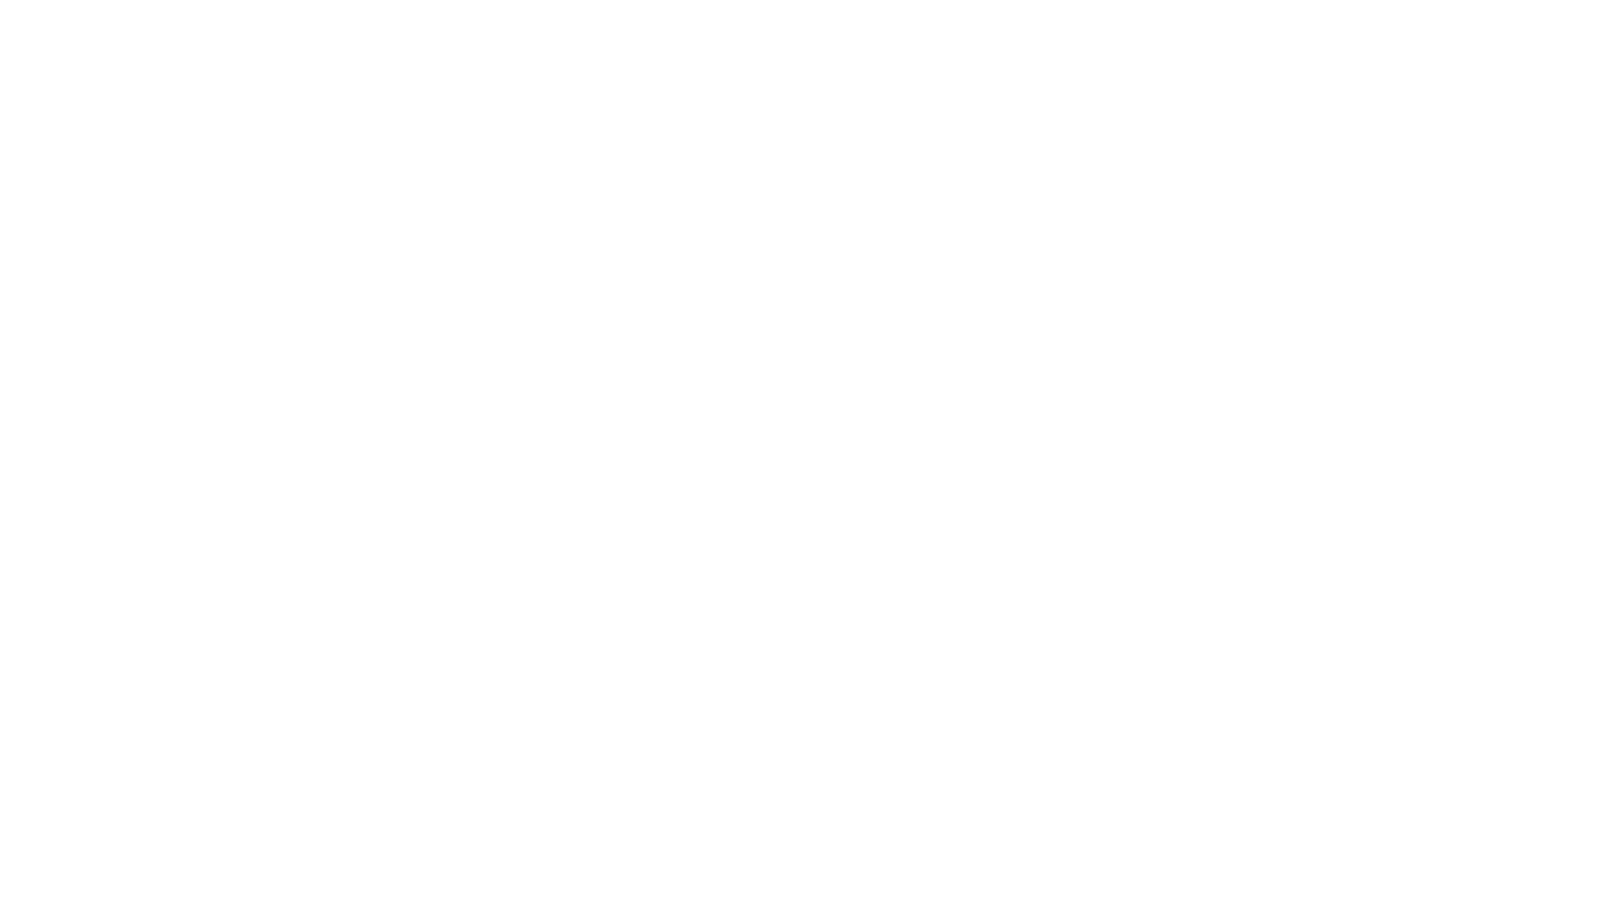 Secomapp Shopify apps provider